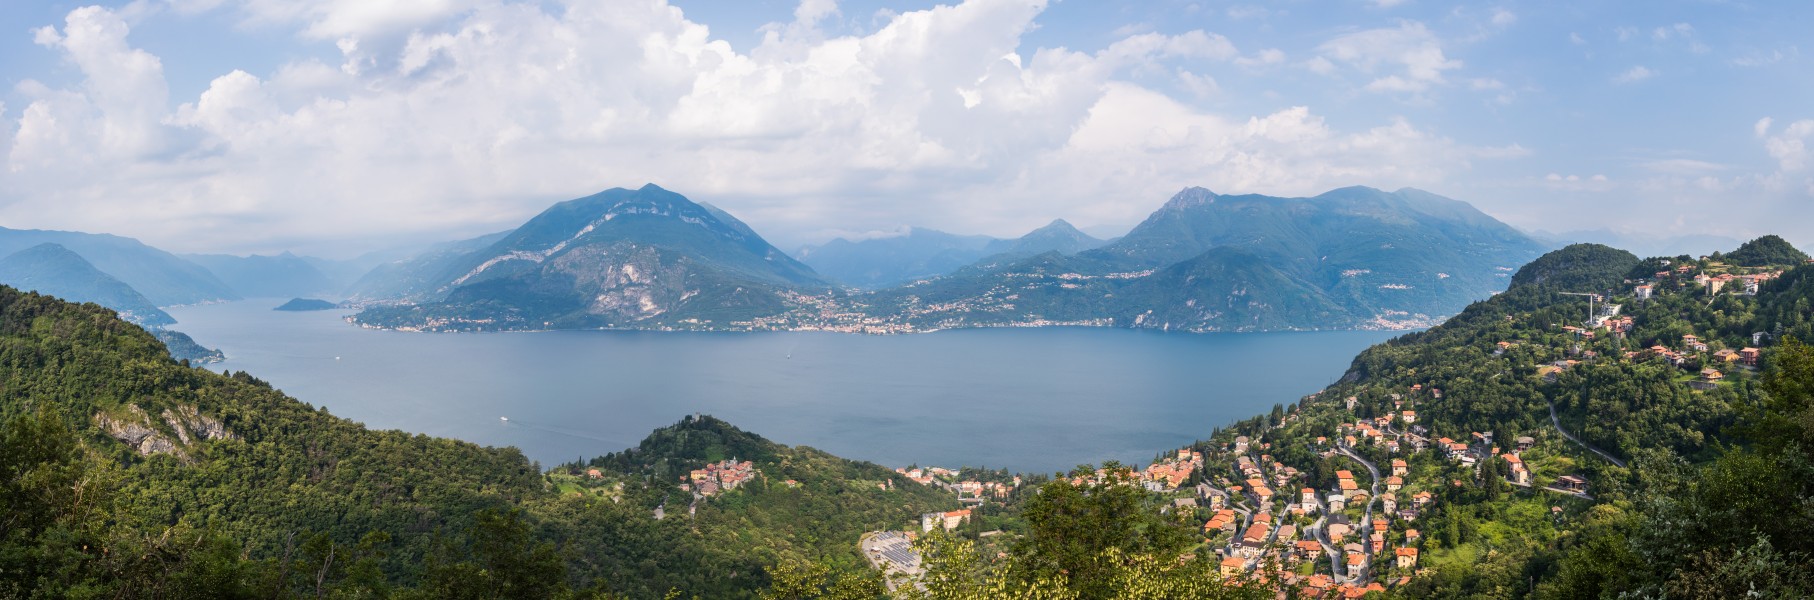 Lago de Como, Italia, 2016-06-25, DD 02-06 PAN